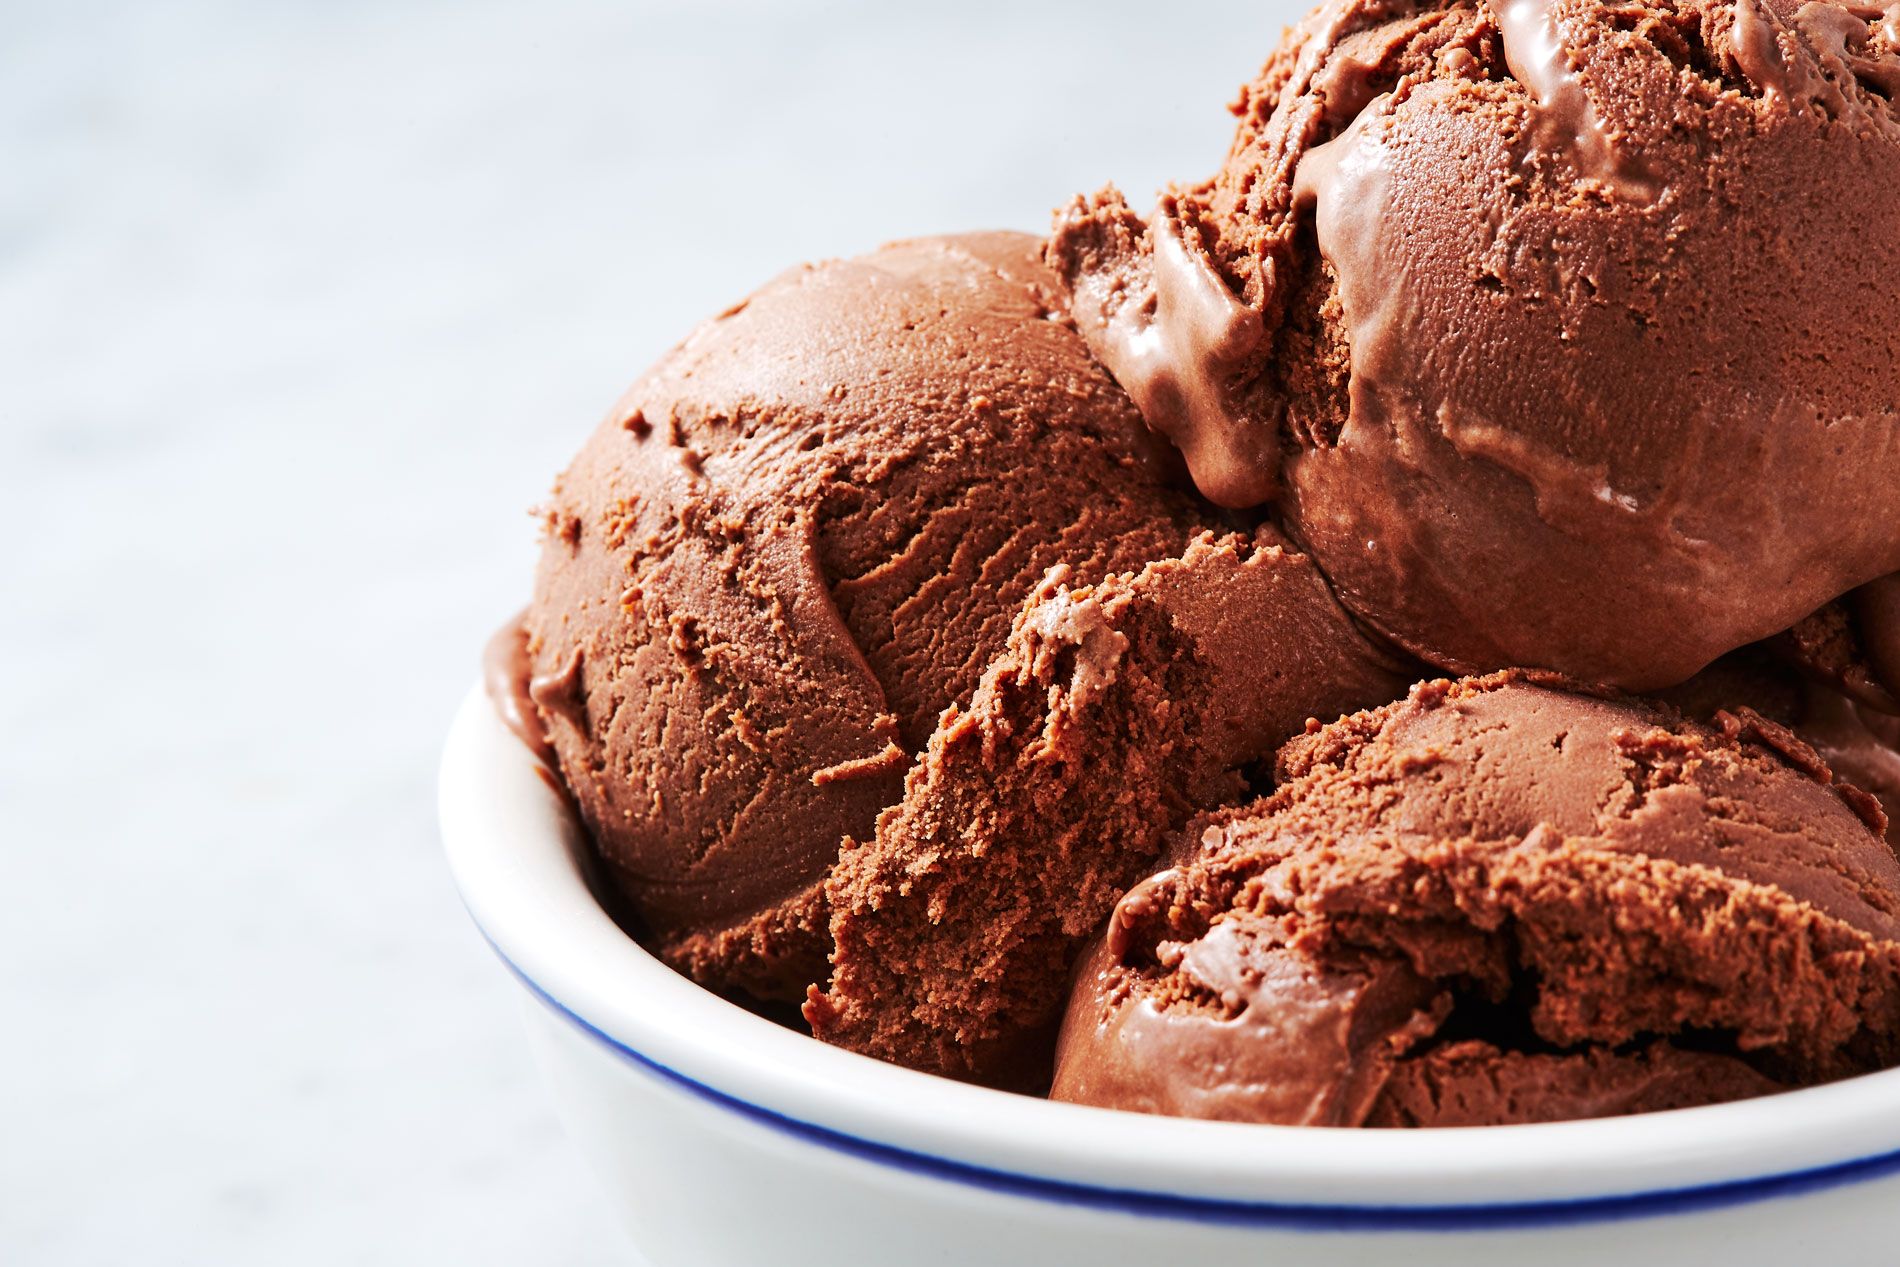 How to Make Chocolate Ice Cream